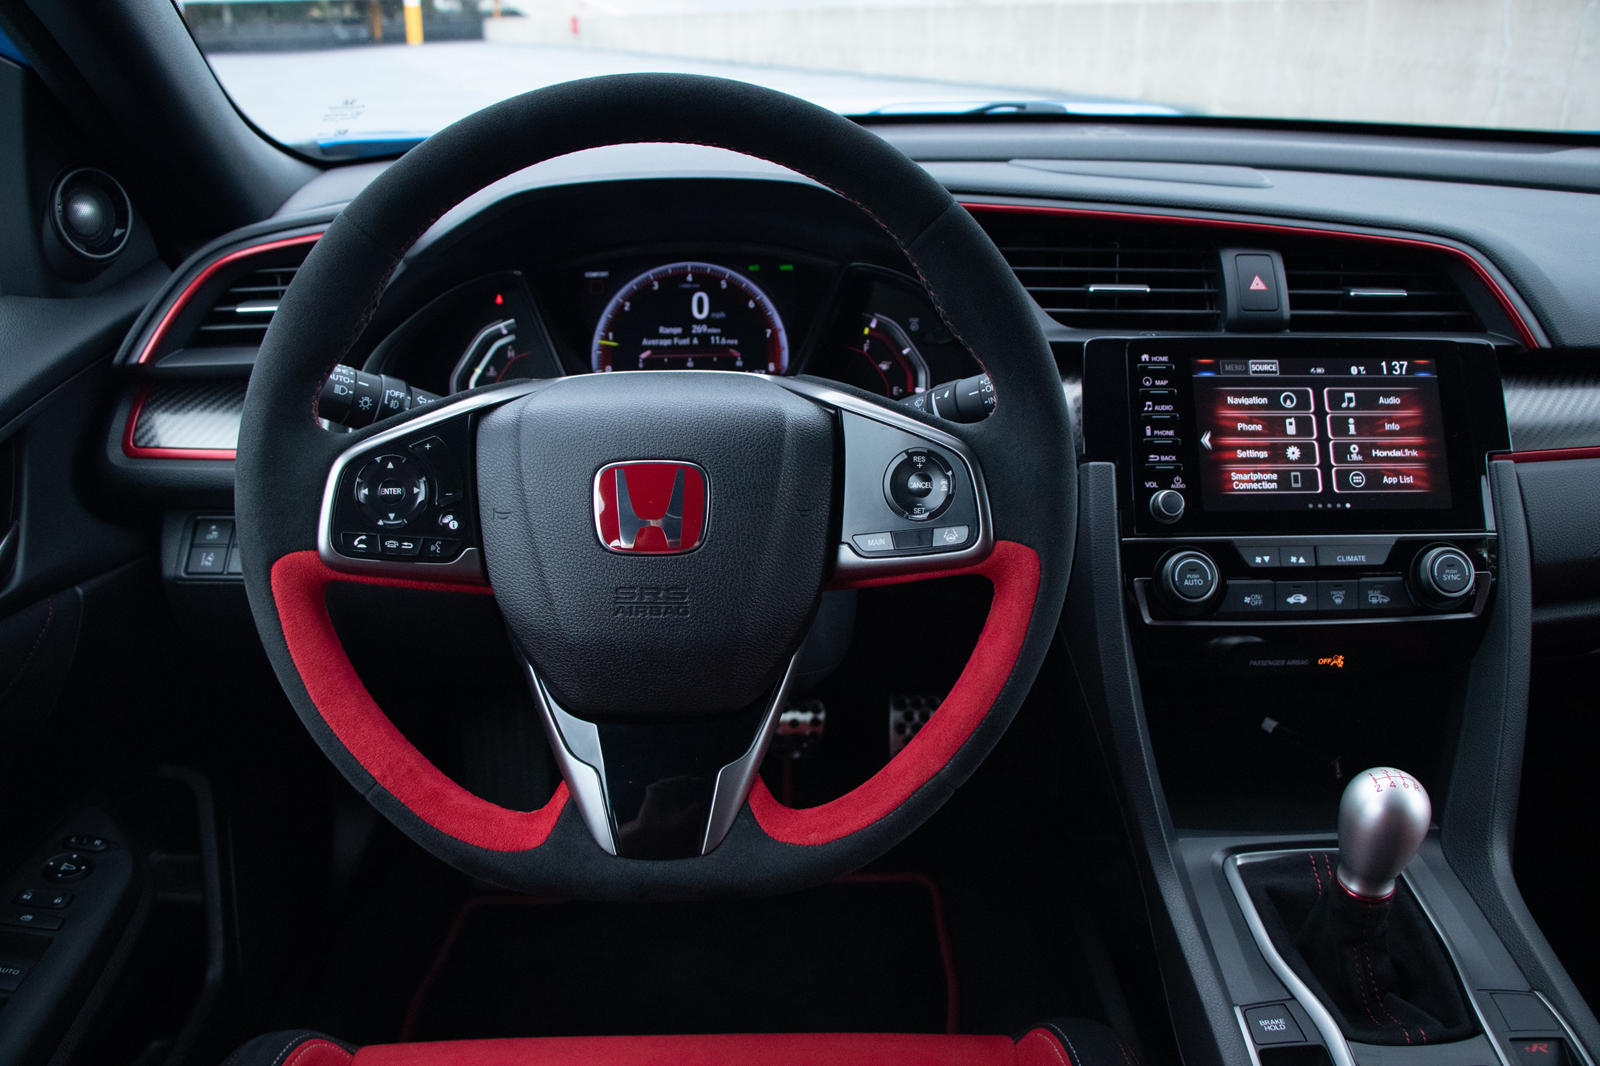 Honda Civic Type R Interior Layout & Technology | Top Gear